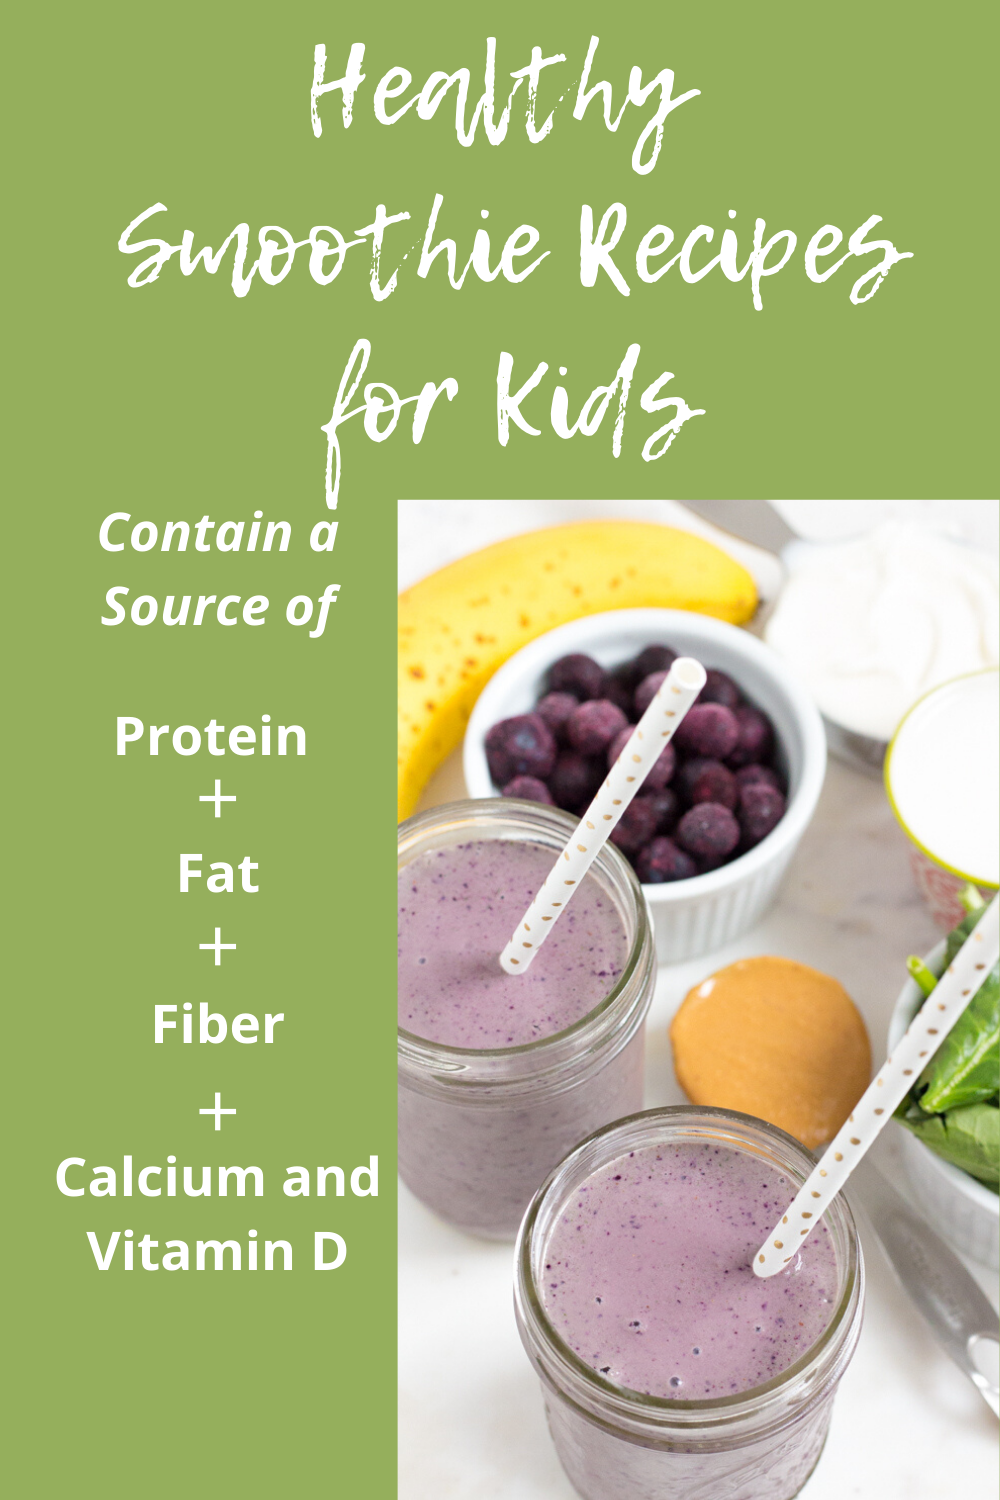 https://laurensharifi.com/wp-content/uploads/2020/04/Healthy-Smoothie-Recipes-for-Kids-1.png